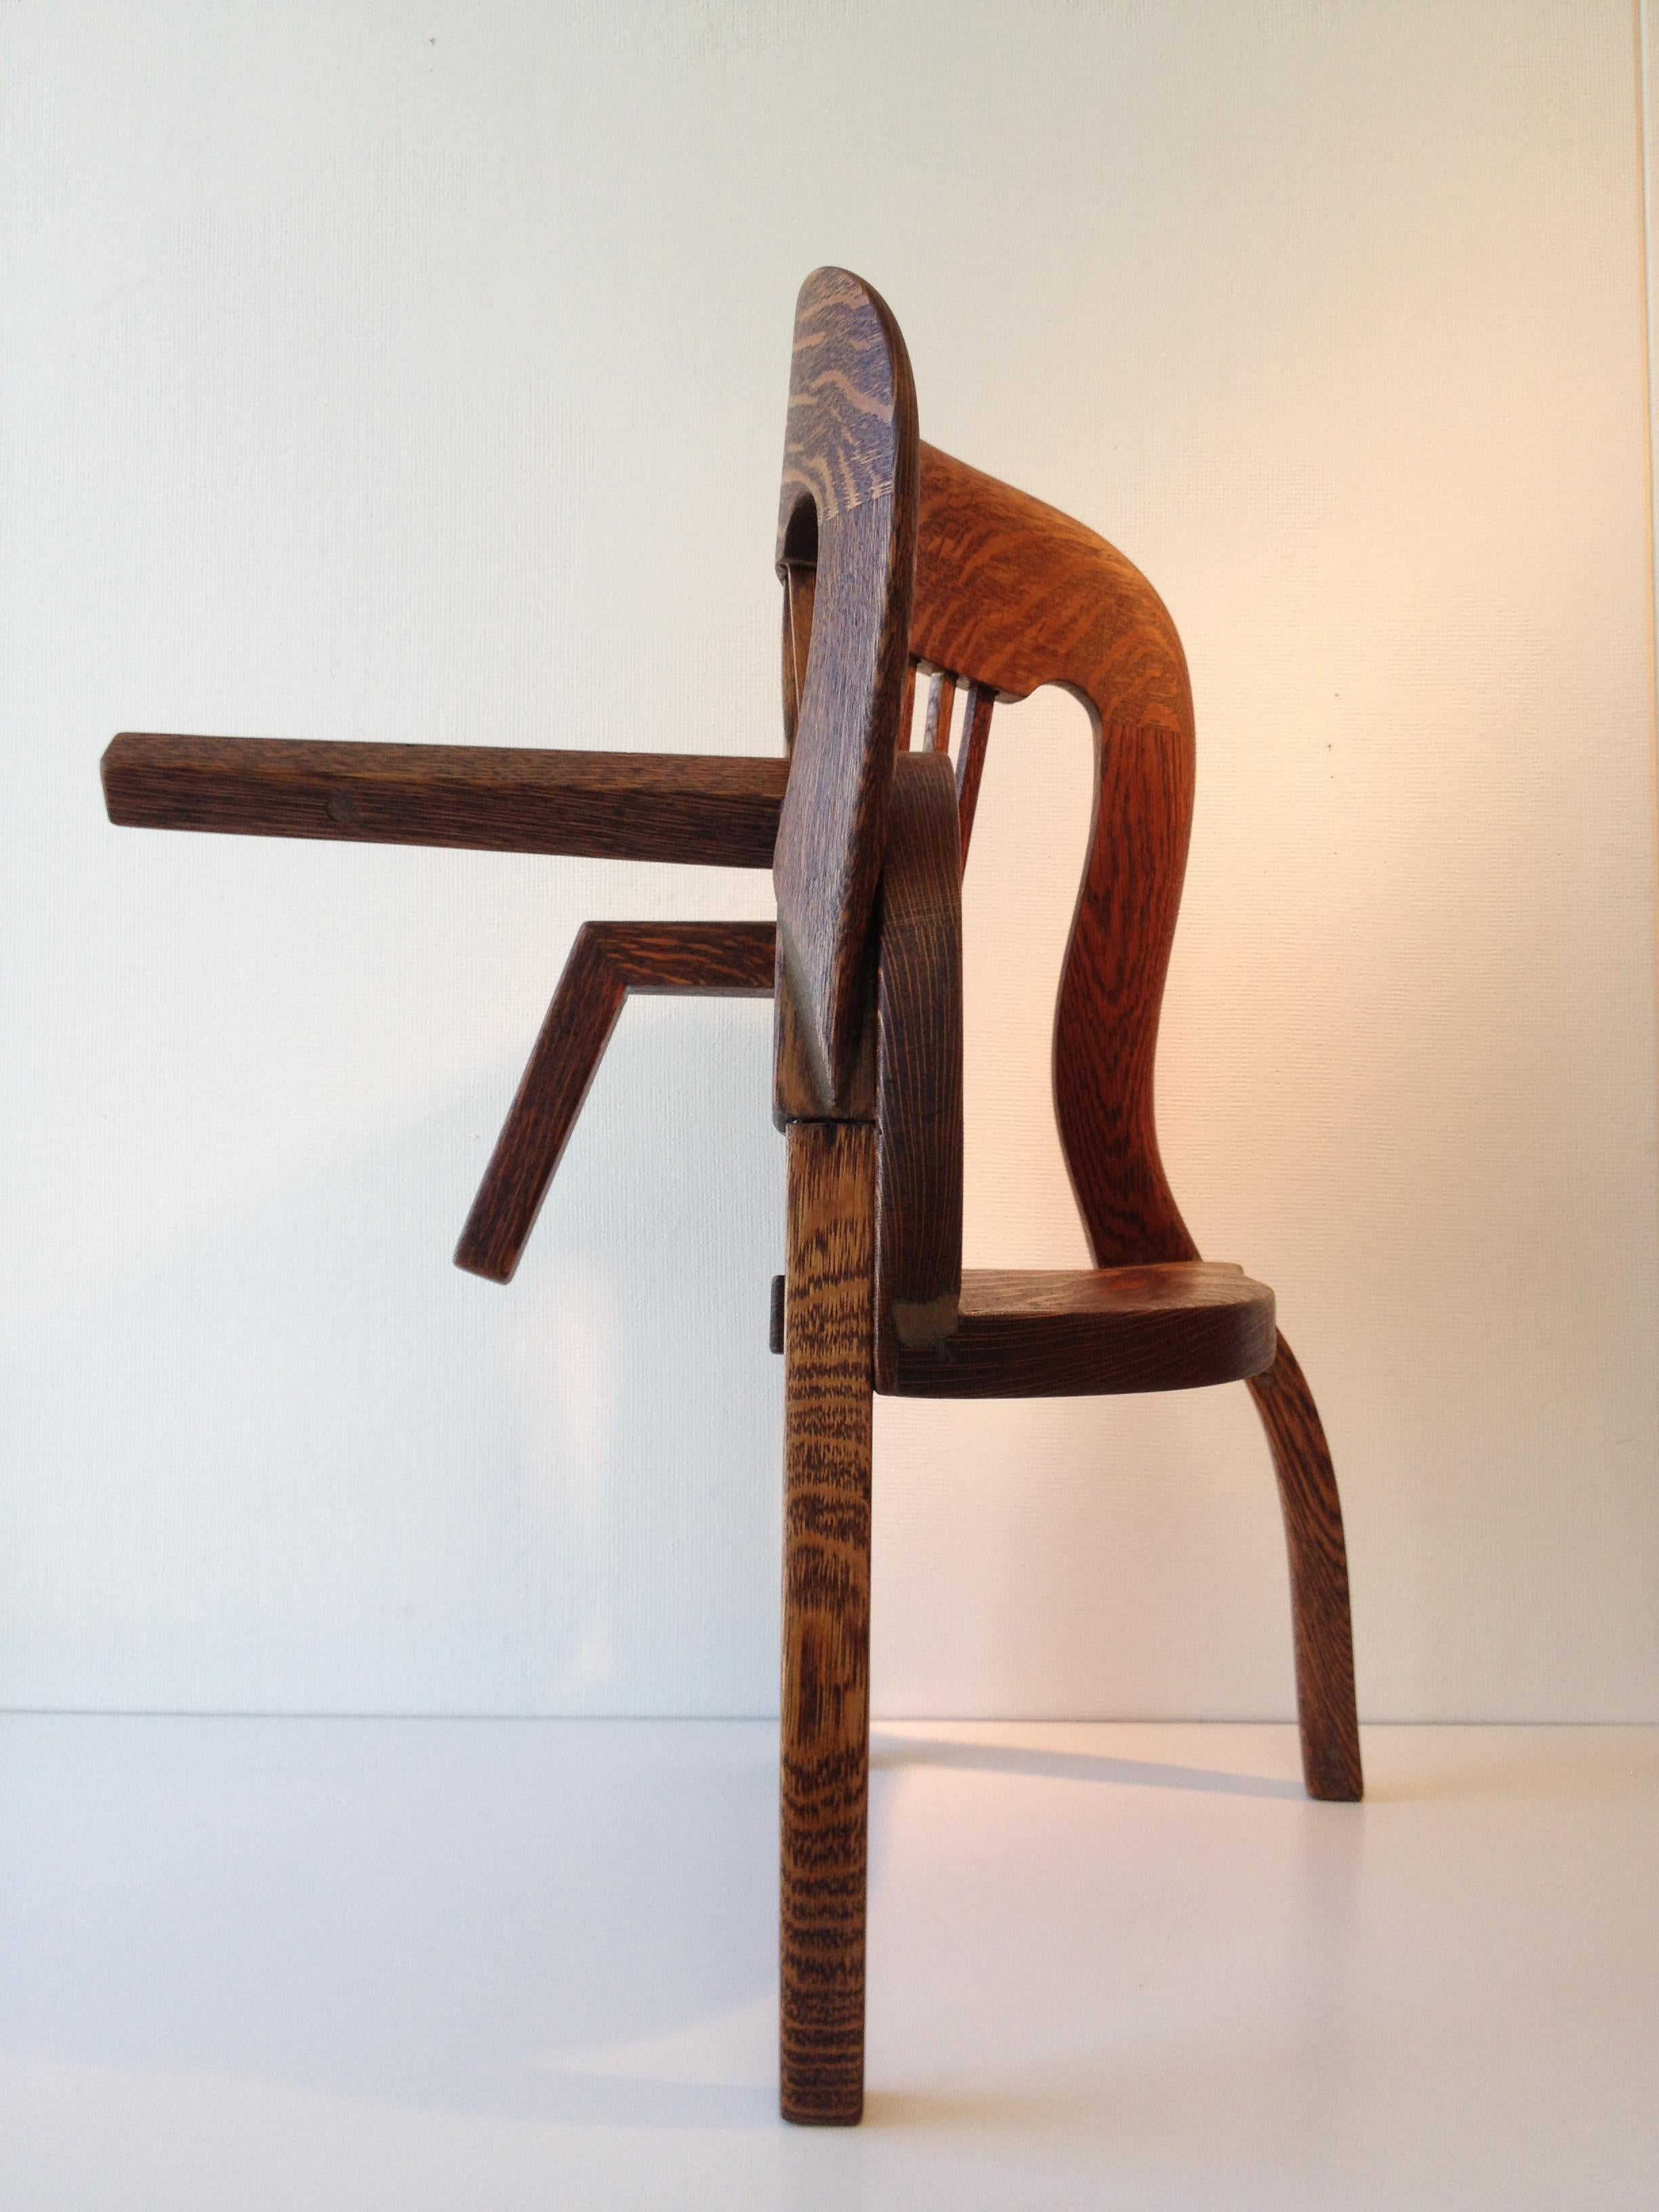 Chair no. 92 (jury chair reconstructed: sculpture) - Sculpture by Michael Kesselman